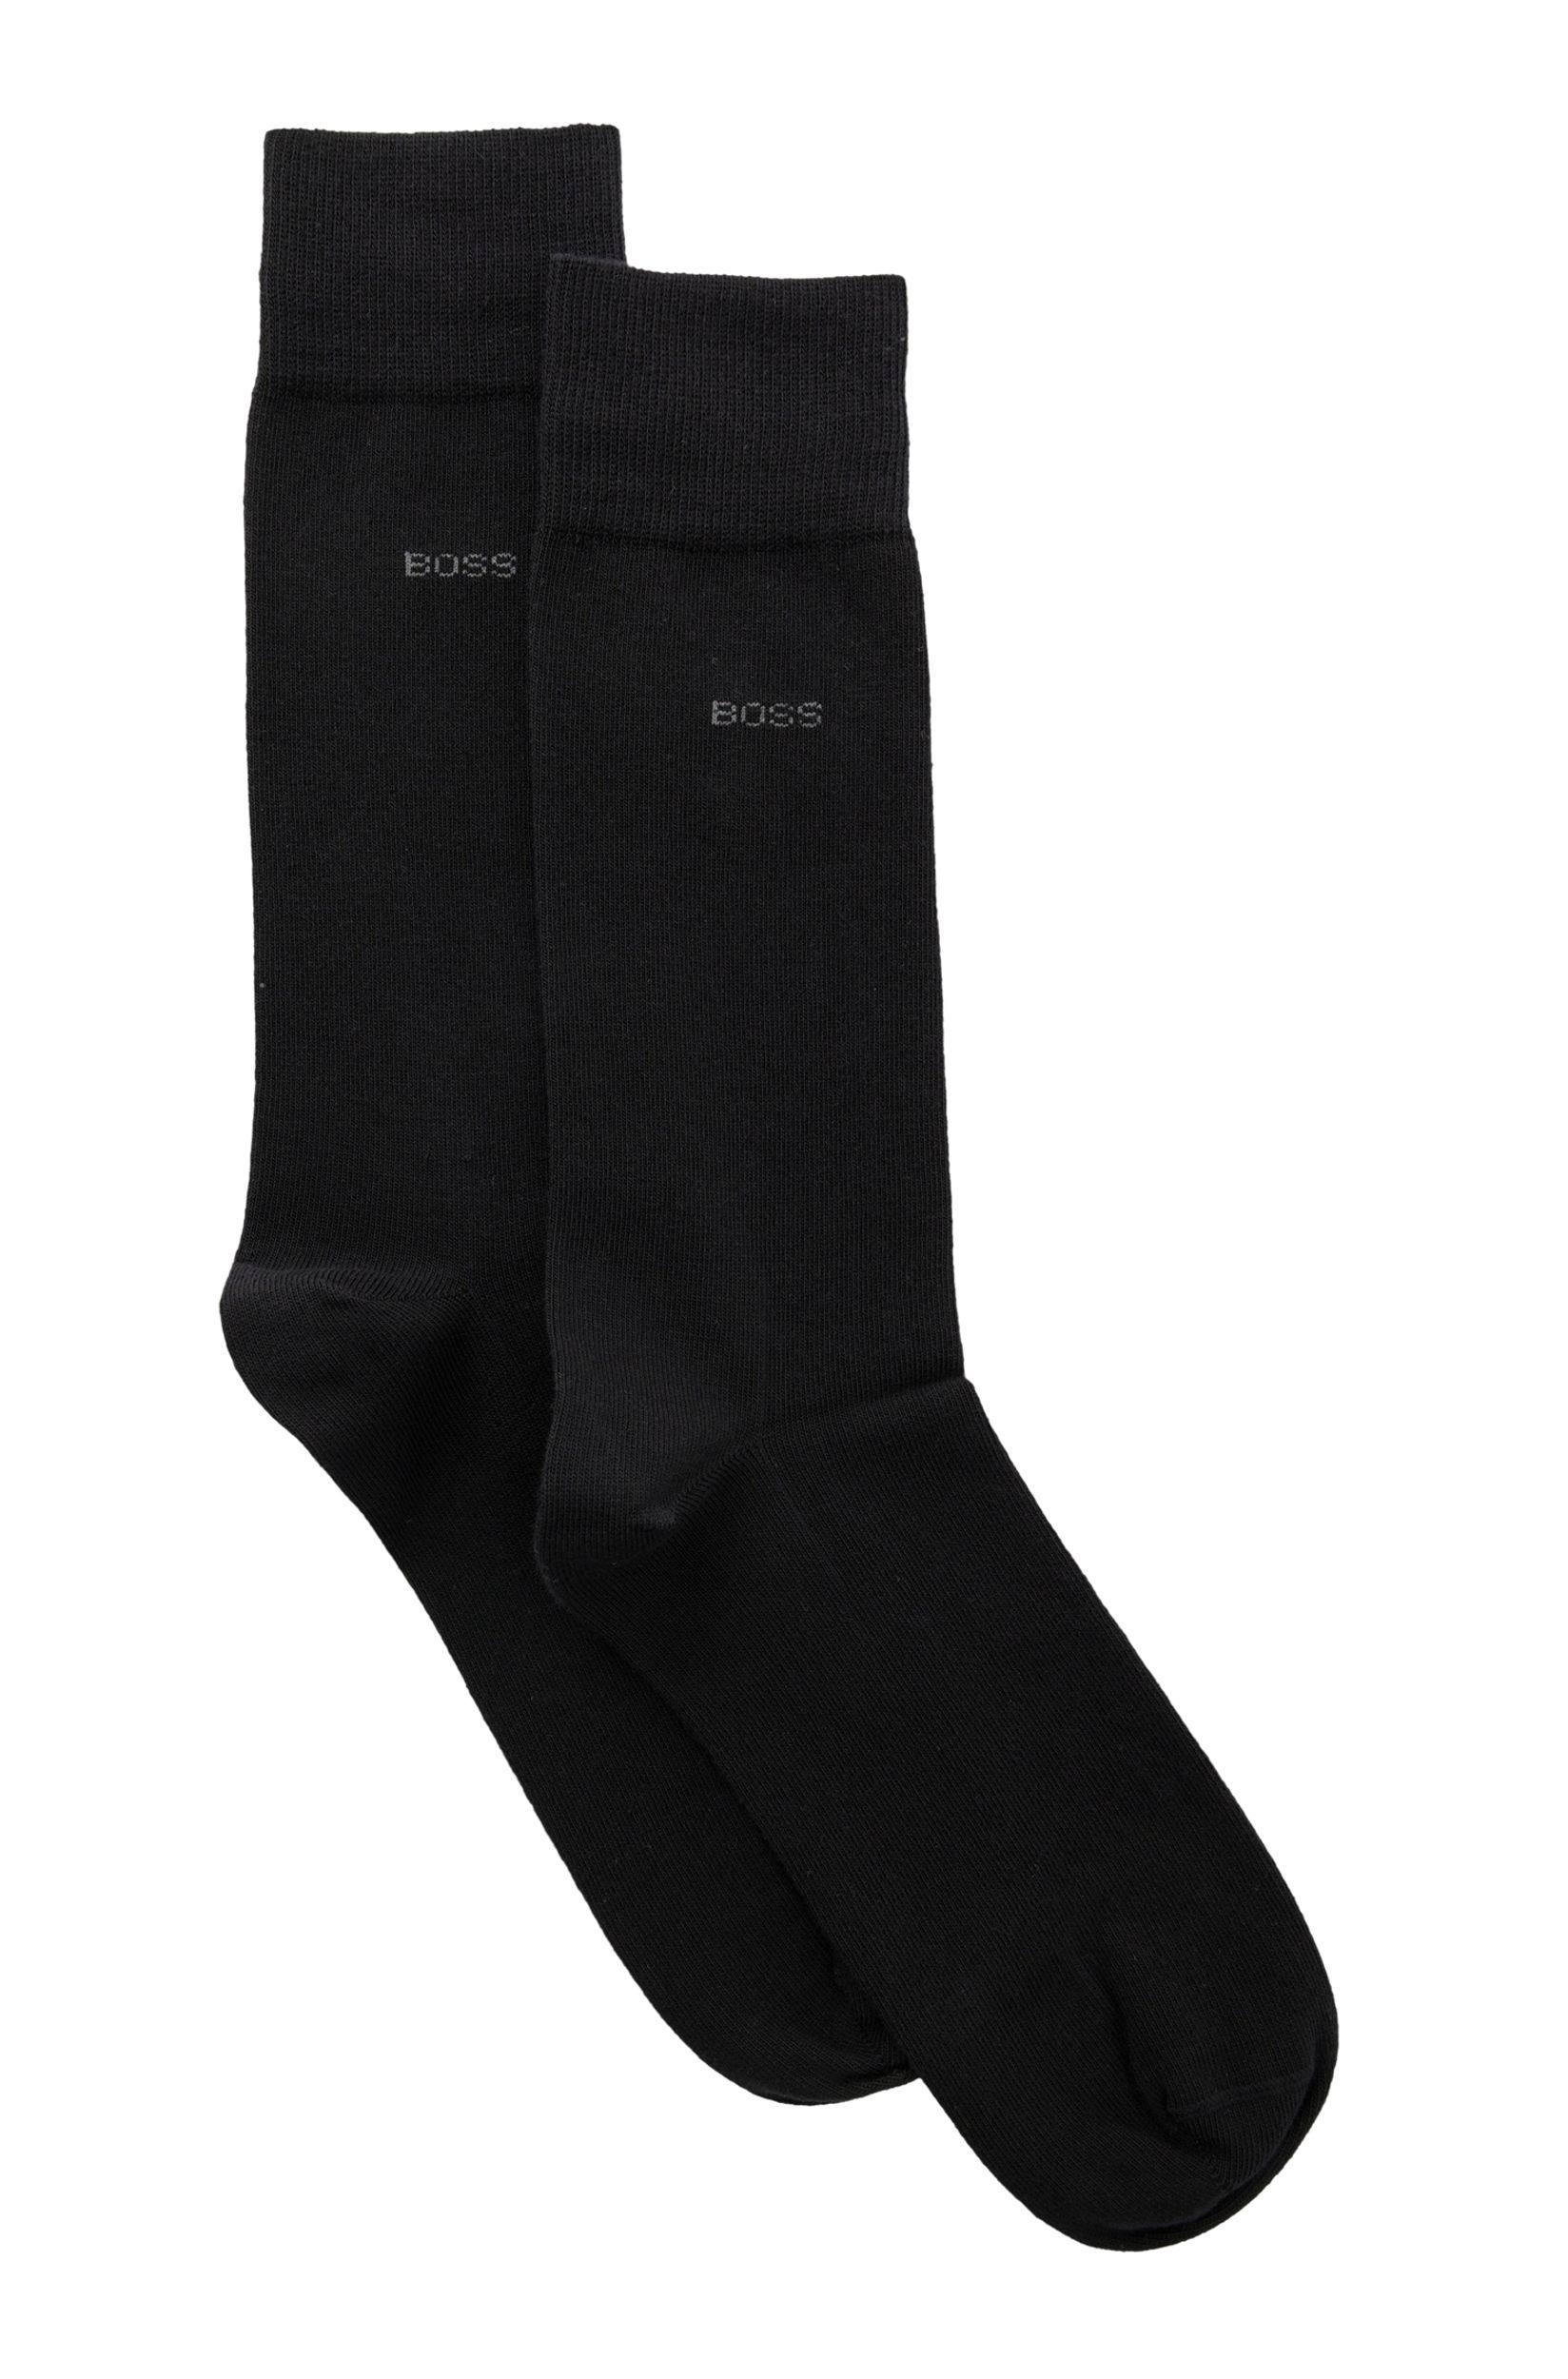 Hugo Boss Menswear Sokken Zwart 082263-001-3942